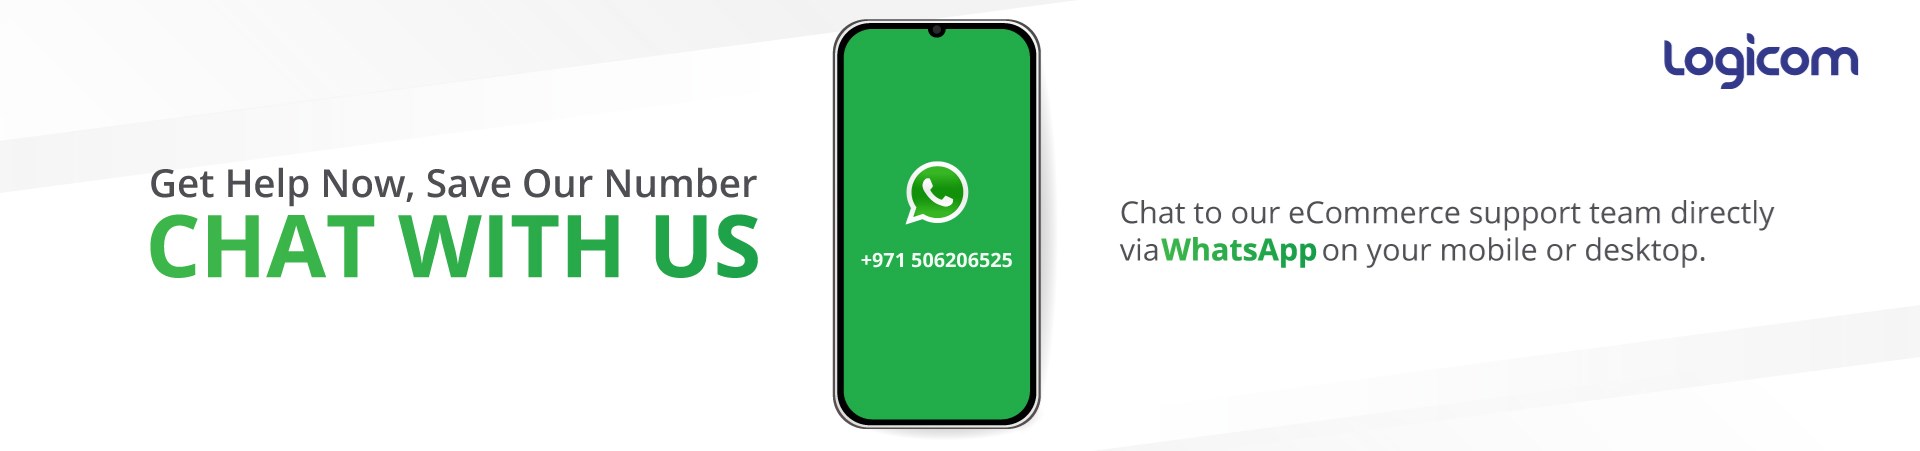 WhatsApp Banner